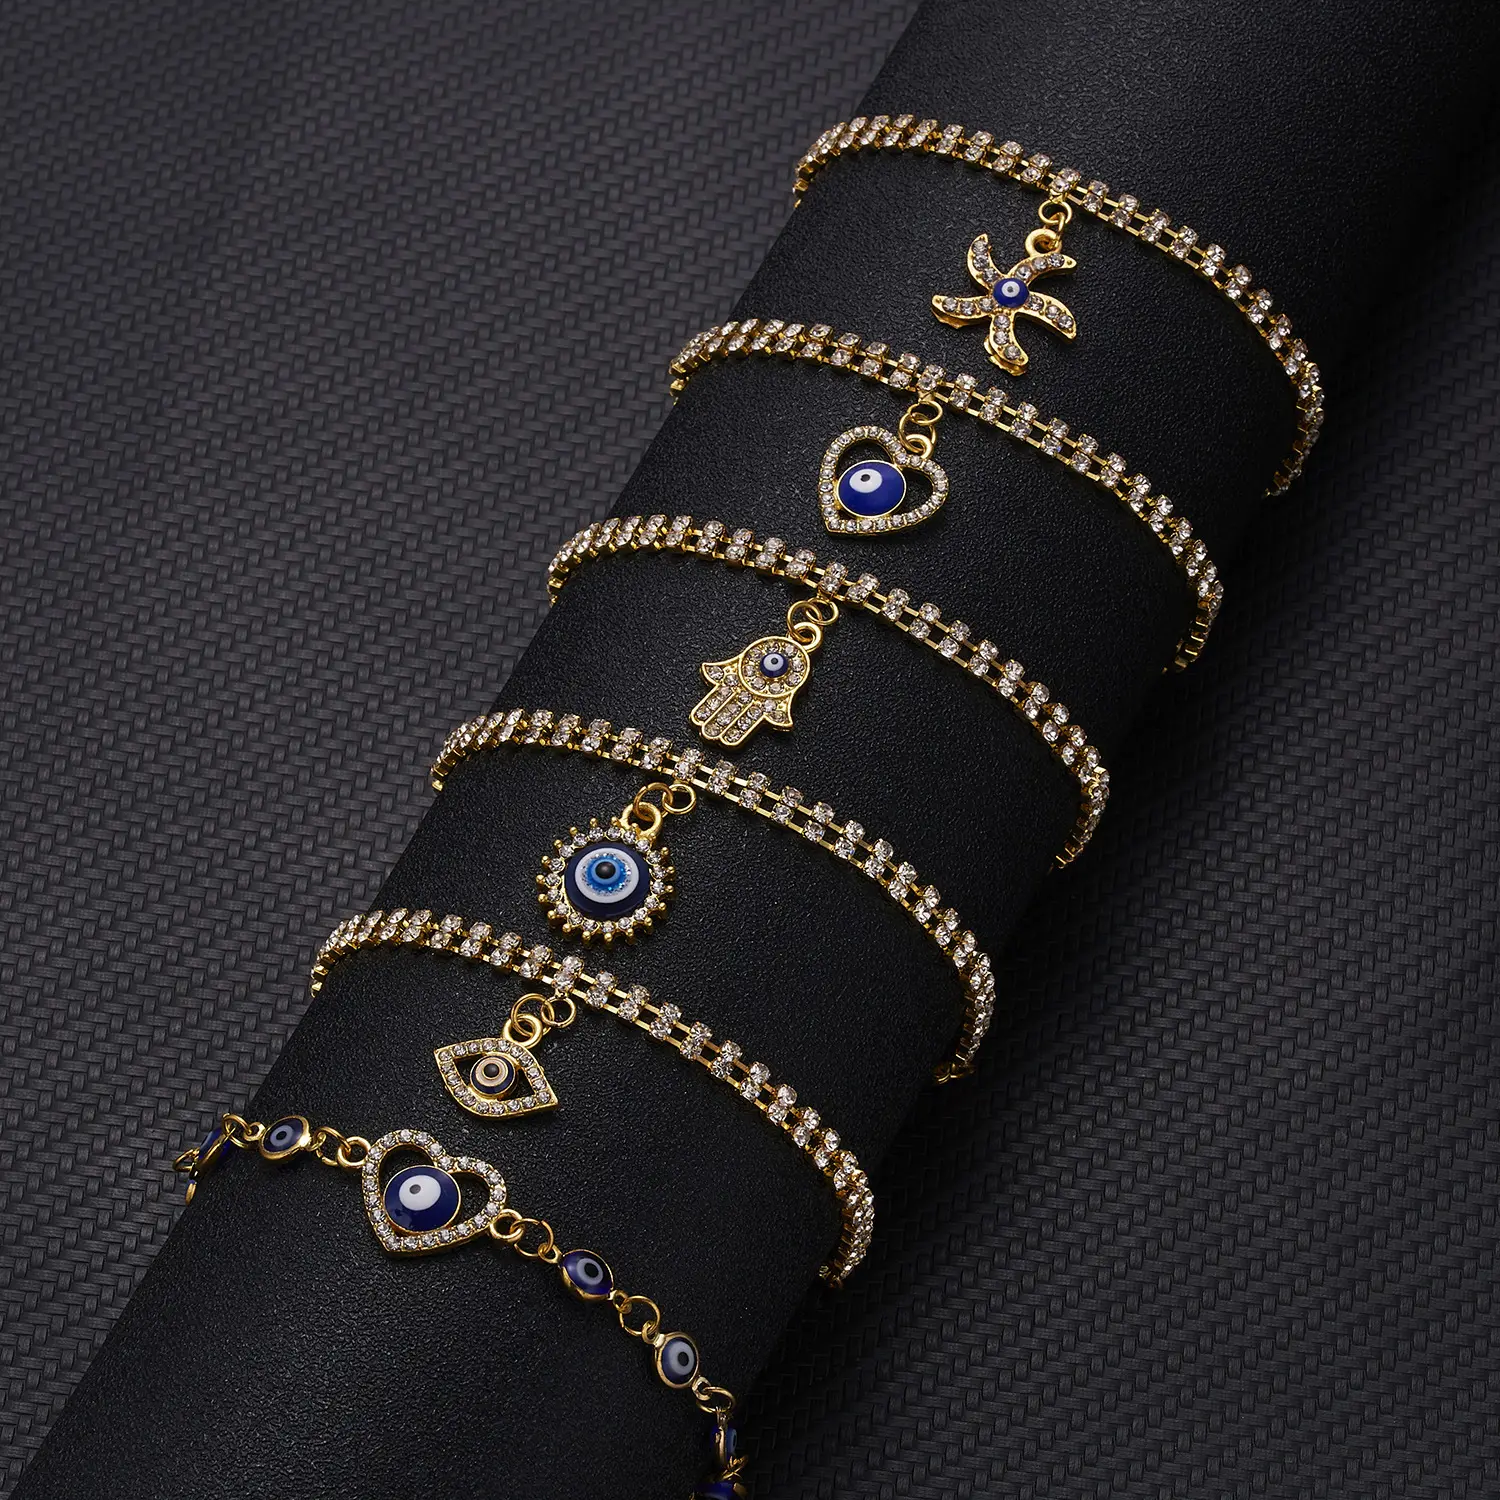 Hovanci 18K Vergulde Ketting Armband Ontwerp Sieraden 9 Armbanden Pour Femmes Palm Geometrische Blauwe Ogen Kristal Armband